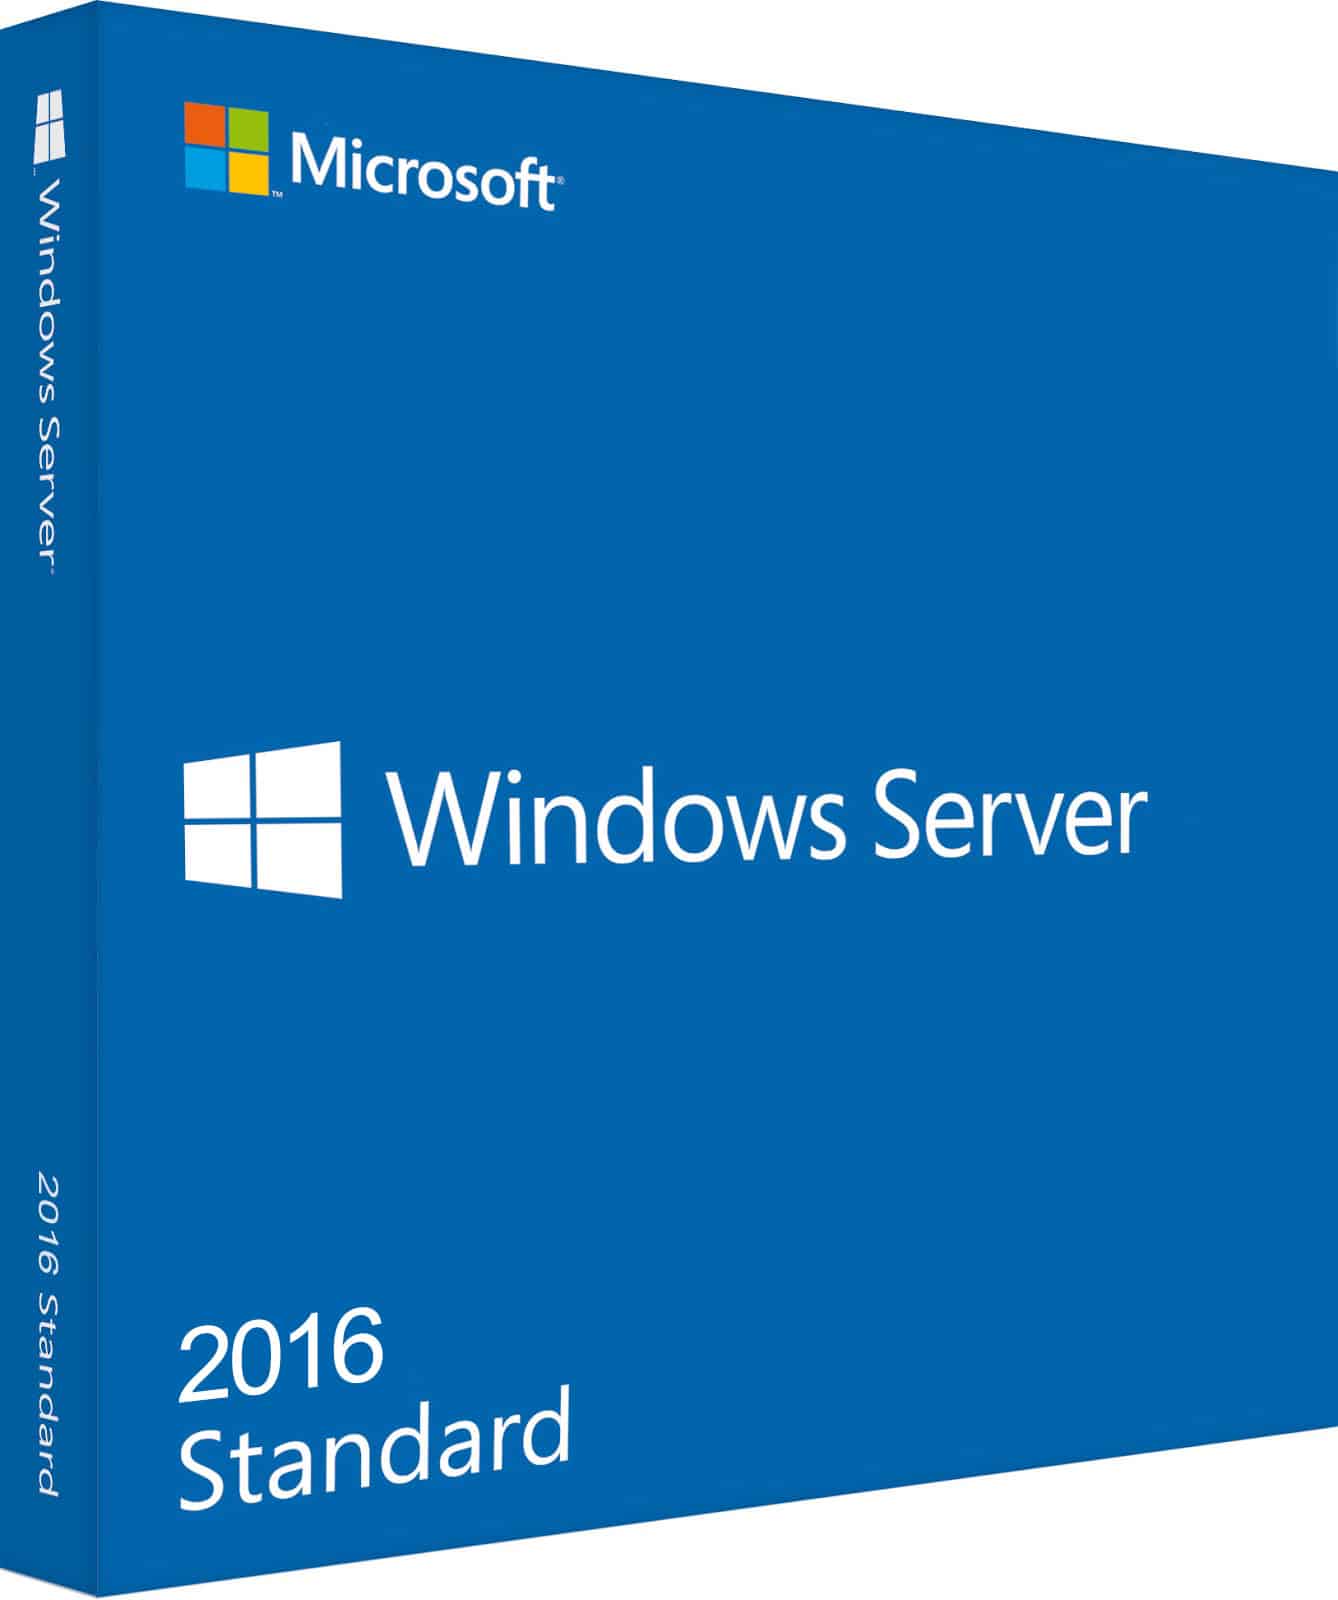 windows server 2016e4Tsb2ZYOcYtC